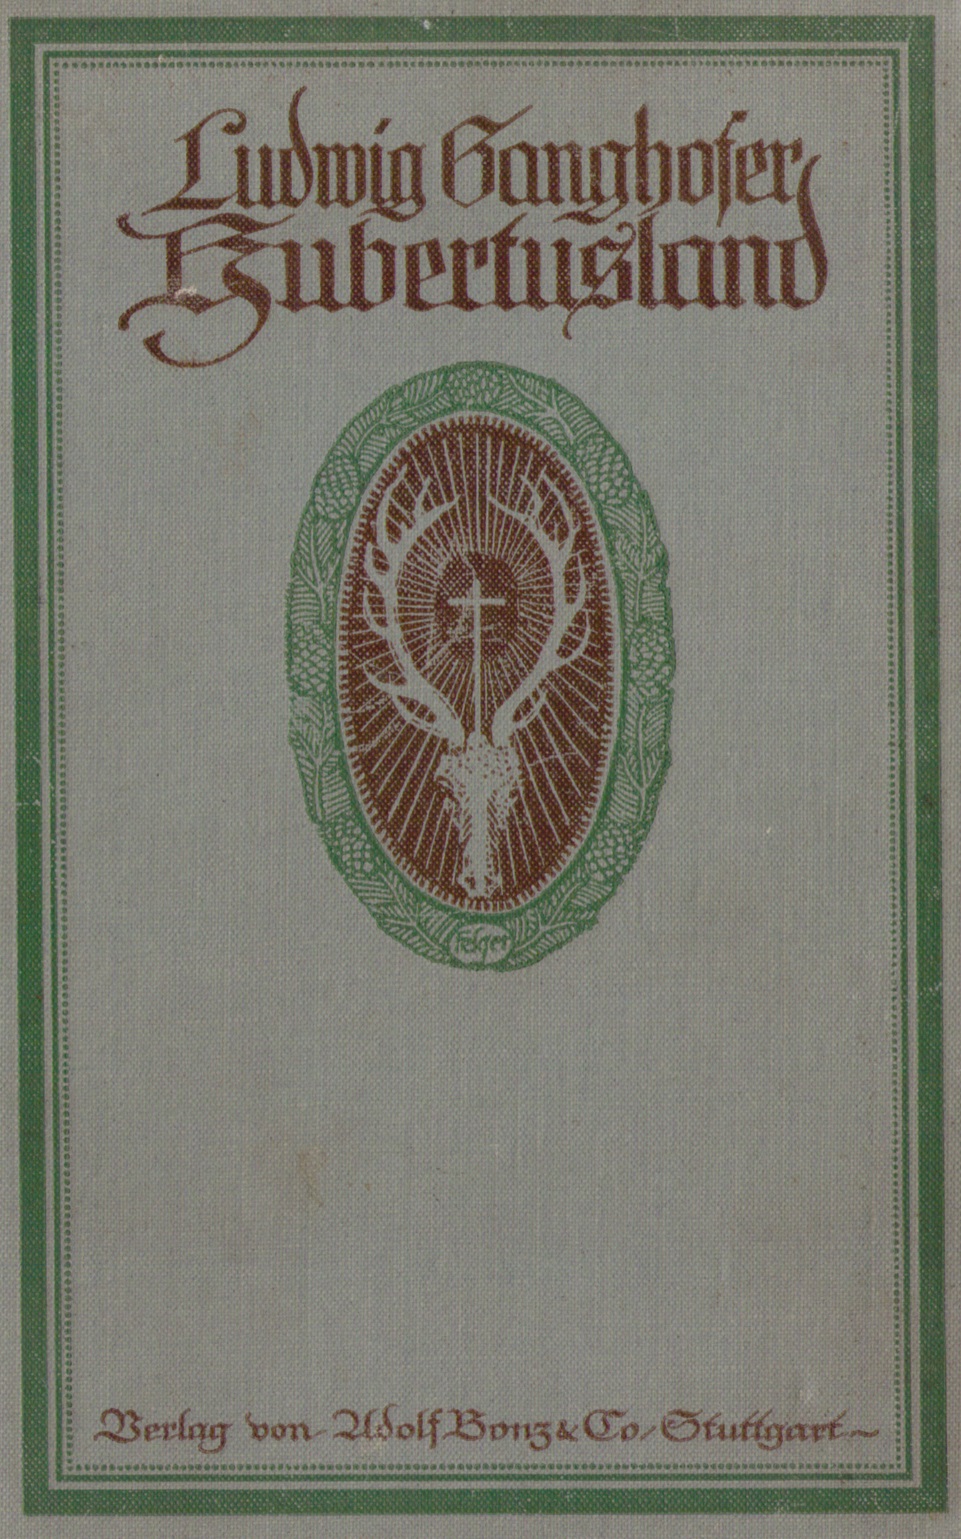 1086_Ludwig Ganghofer - Hubertusland 1912_01p.jpg